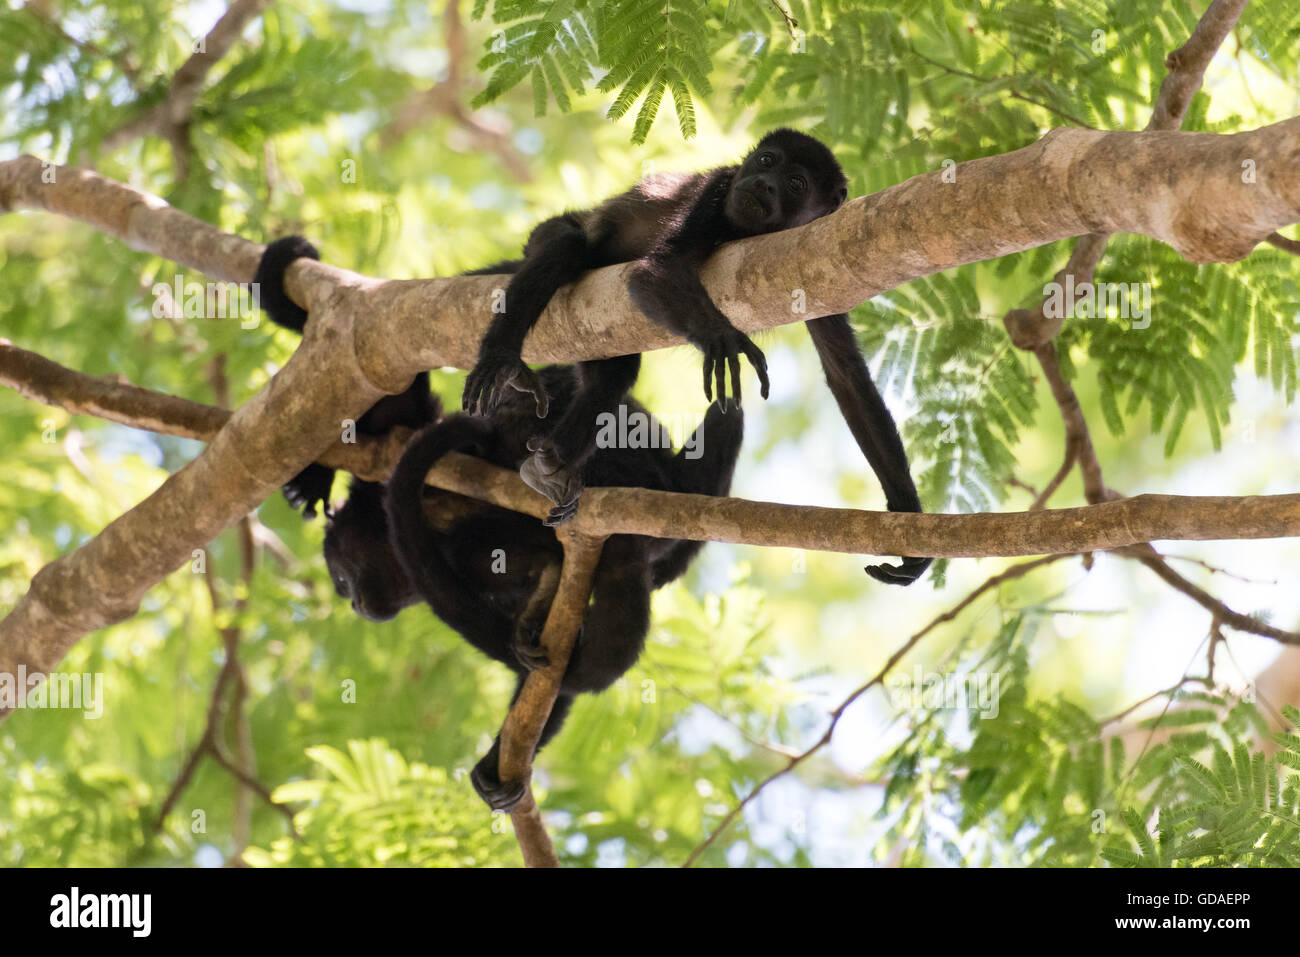 Costa Rica, Guanacaste, Coco, howler monkeys (Alouatta) are a primate genus from the family atelids (Atelidae) Stock Photo